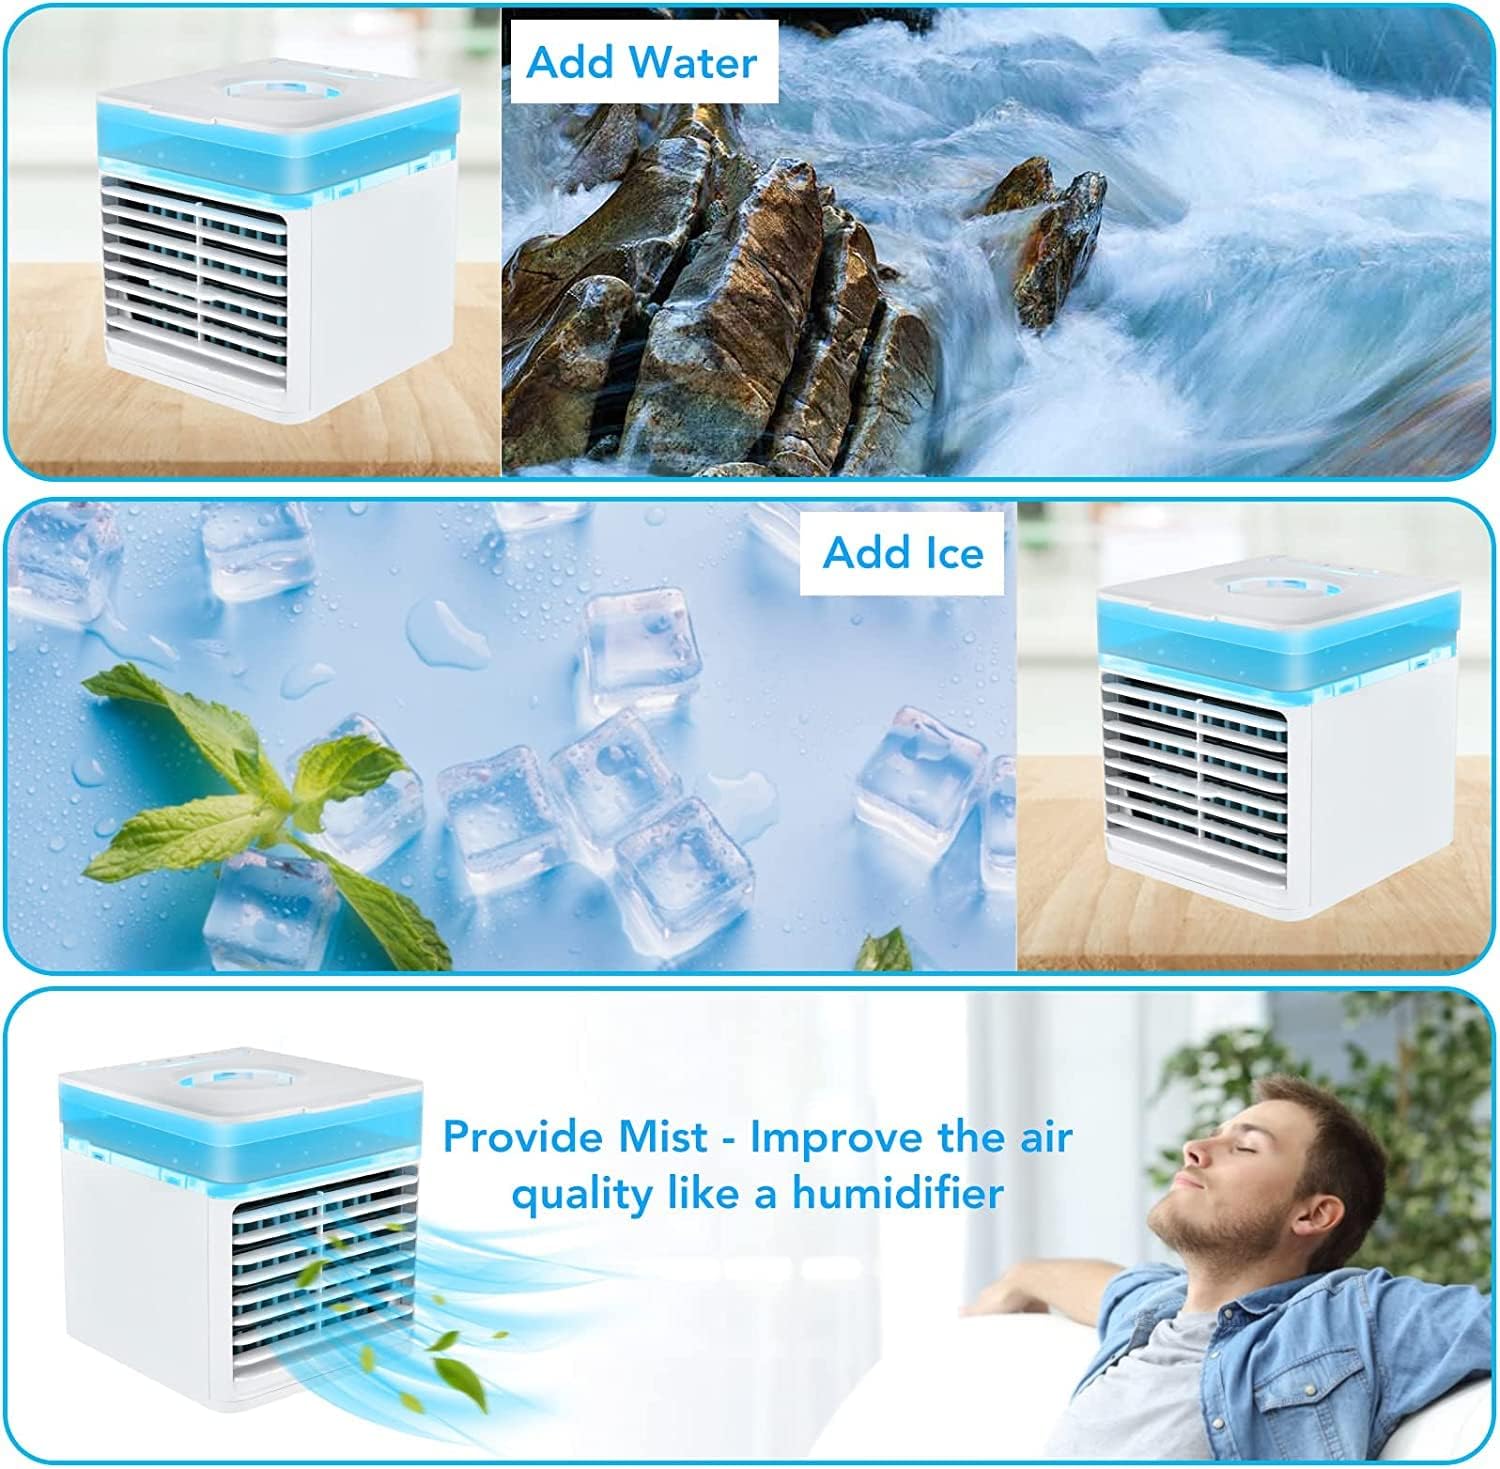 Ultra Air Cooler Reviews Is It Portable Air Cooler Safely U - Alabama - Birmingham ID1553634